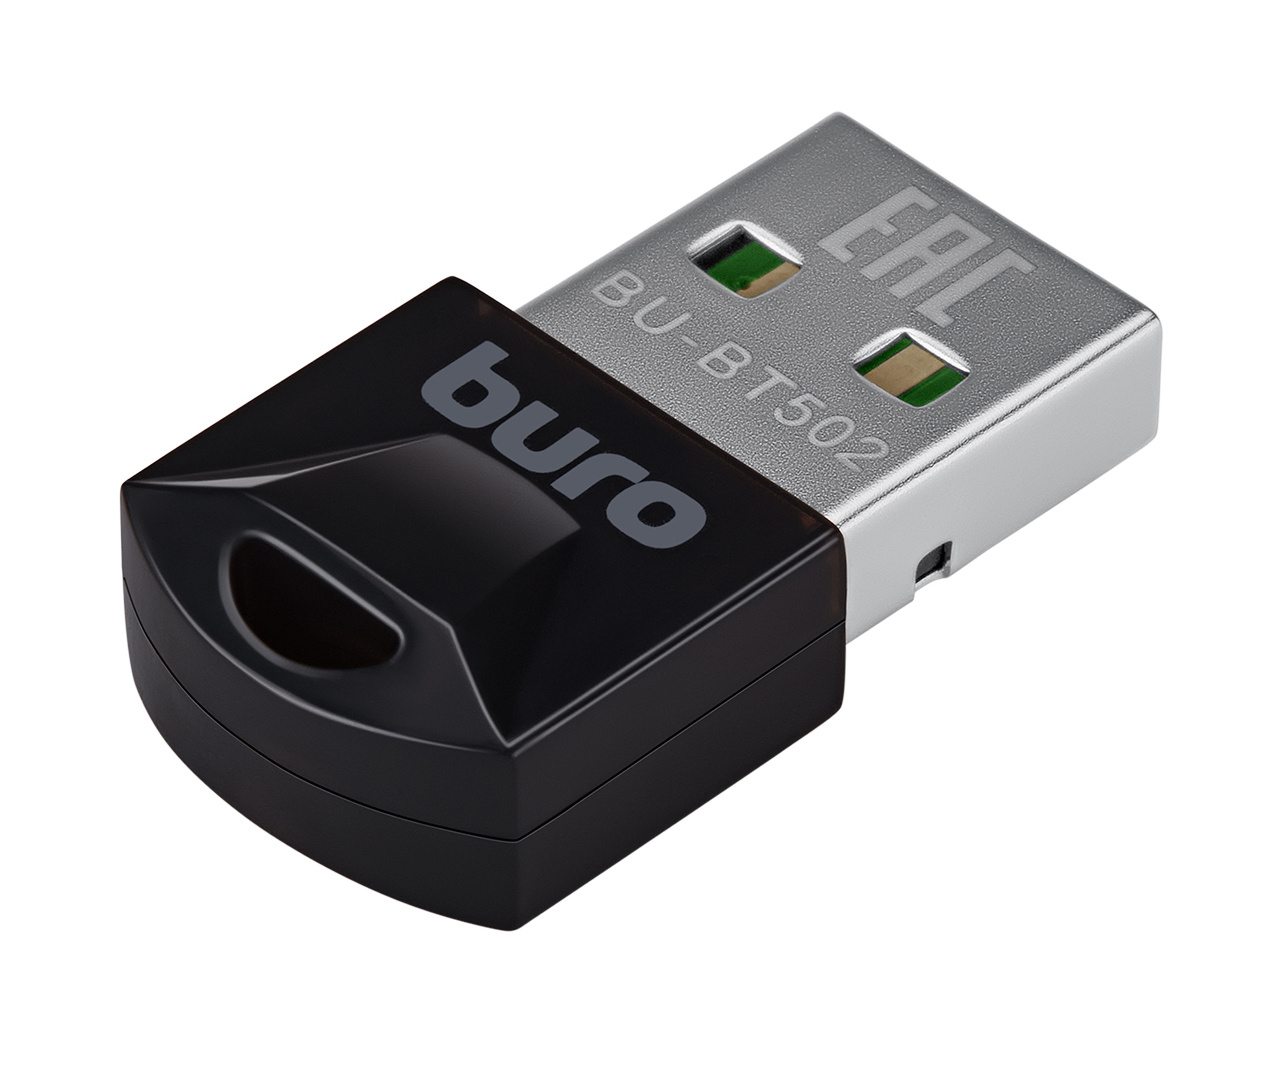 Адаптер USB Buro BU-BT502